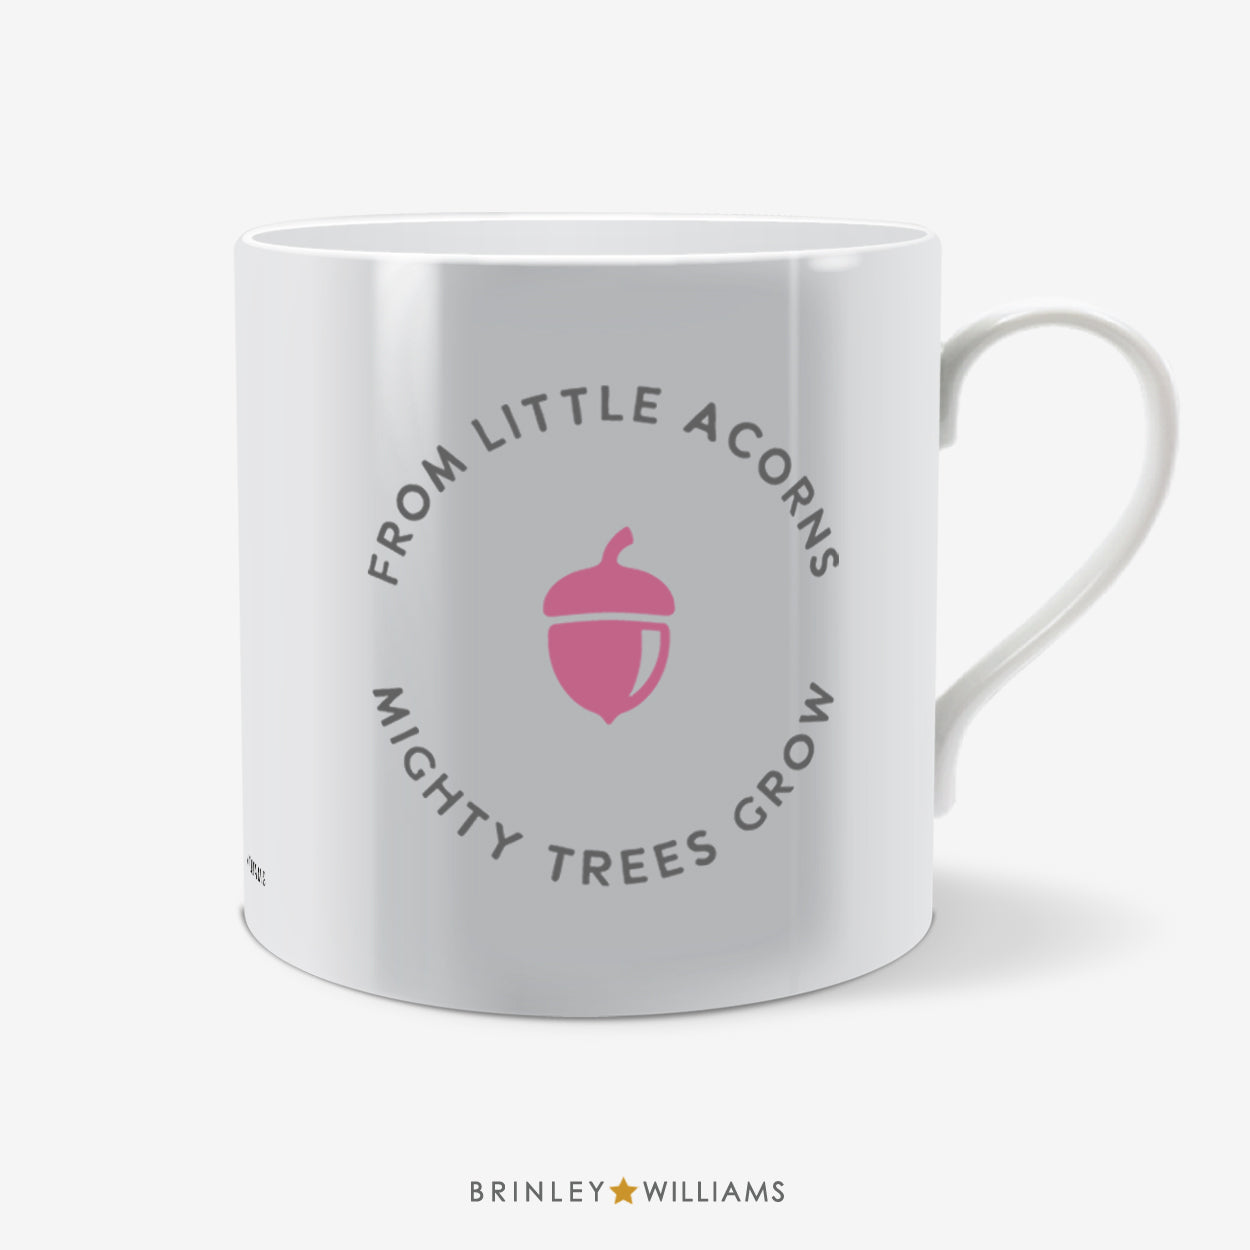 From little acorns mighty trees grow Fun Mug - Pink